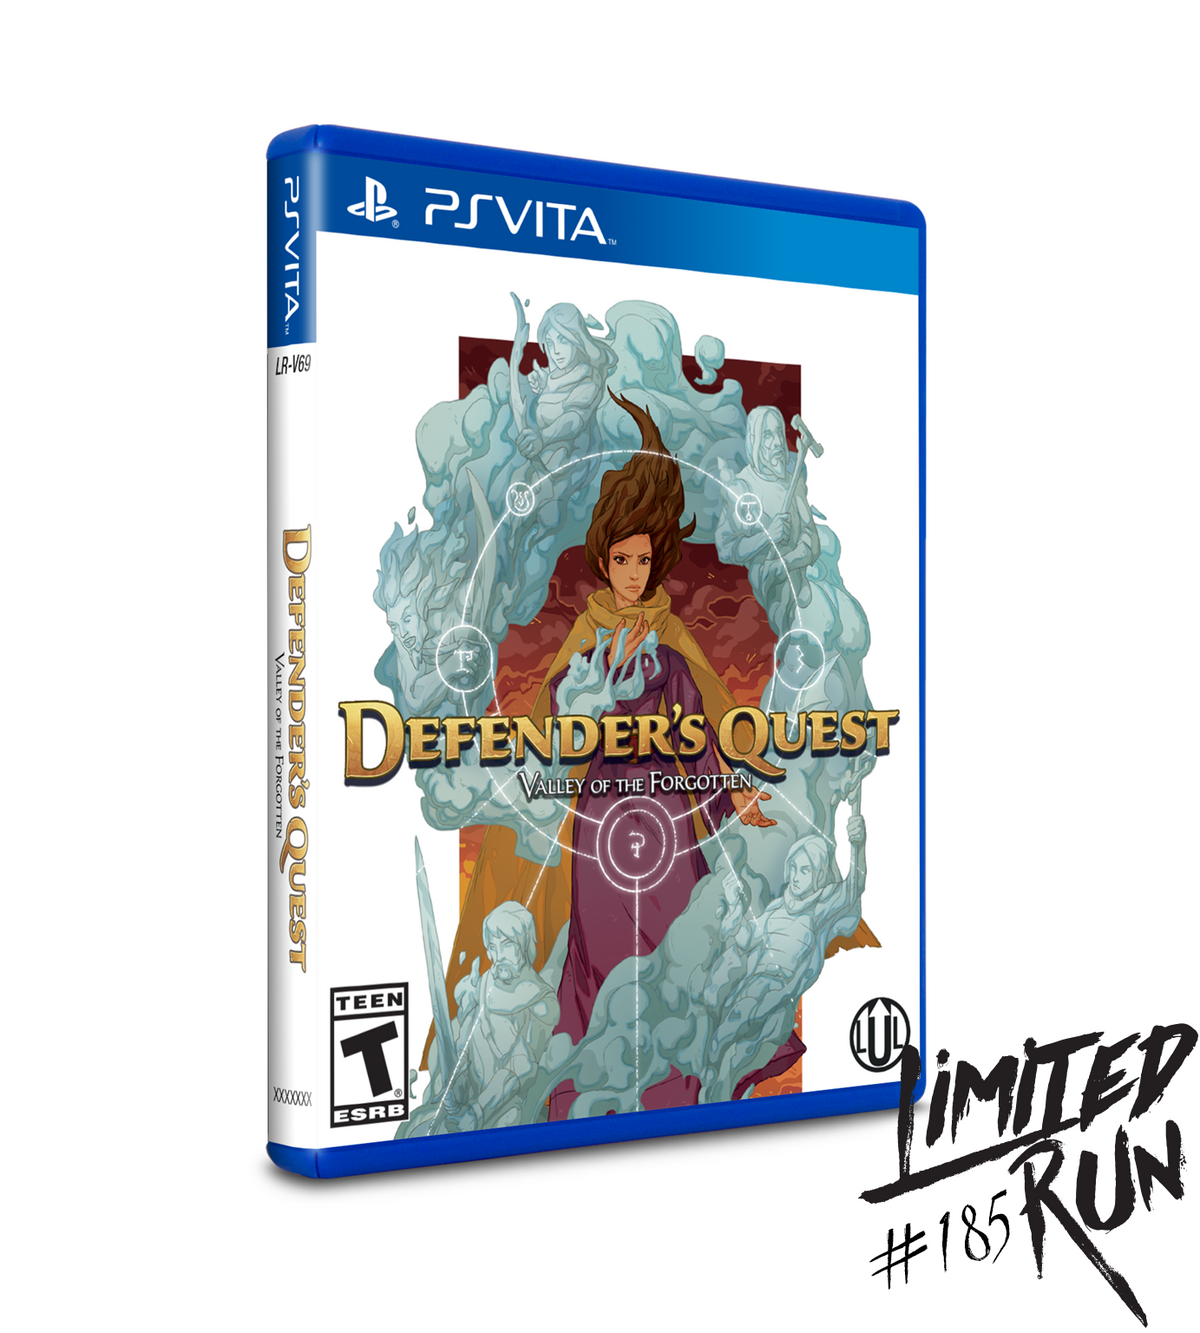 Limited Run #185: Defender's Quest (Vita)